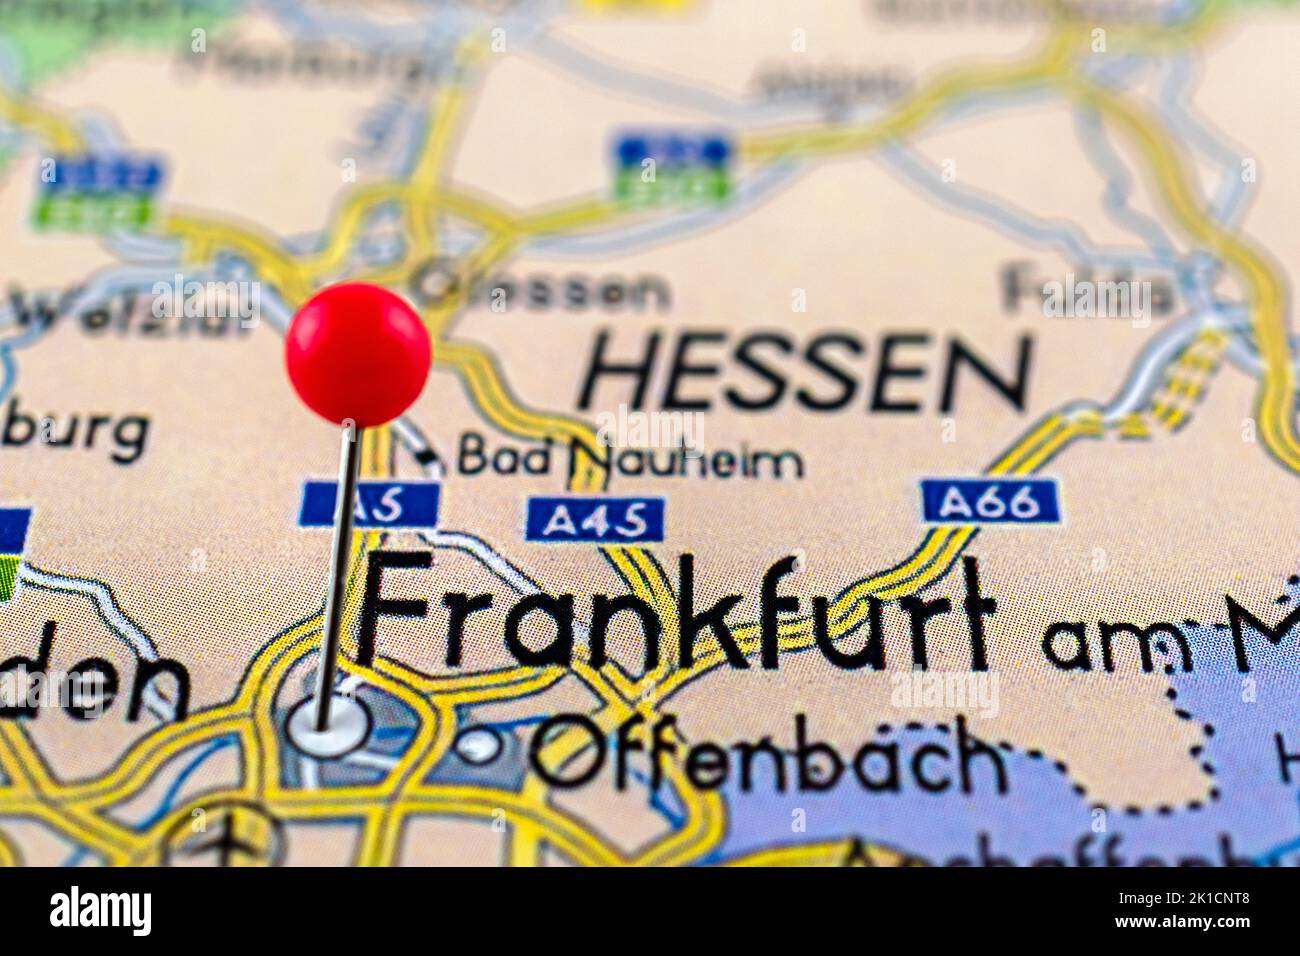 Frankfurt map. Close up of Frankfurt map with red pin. Map with red pin point of Frankfurt in Germany. Stock Photo